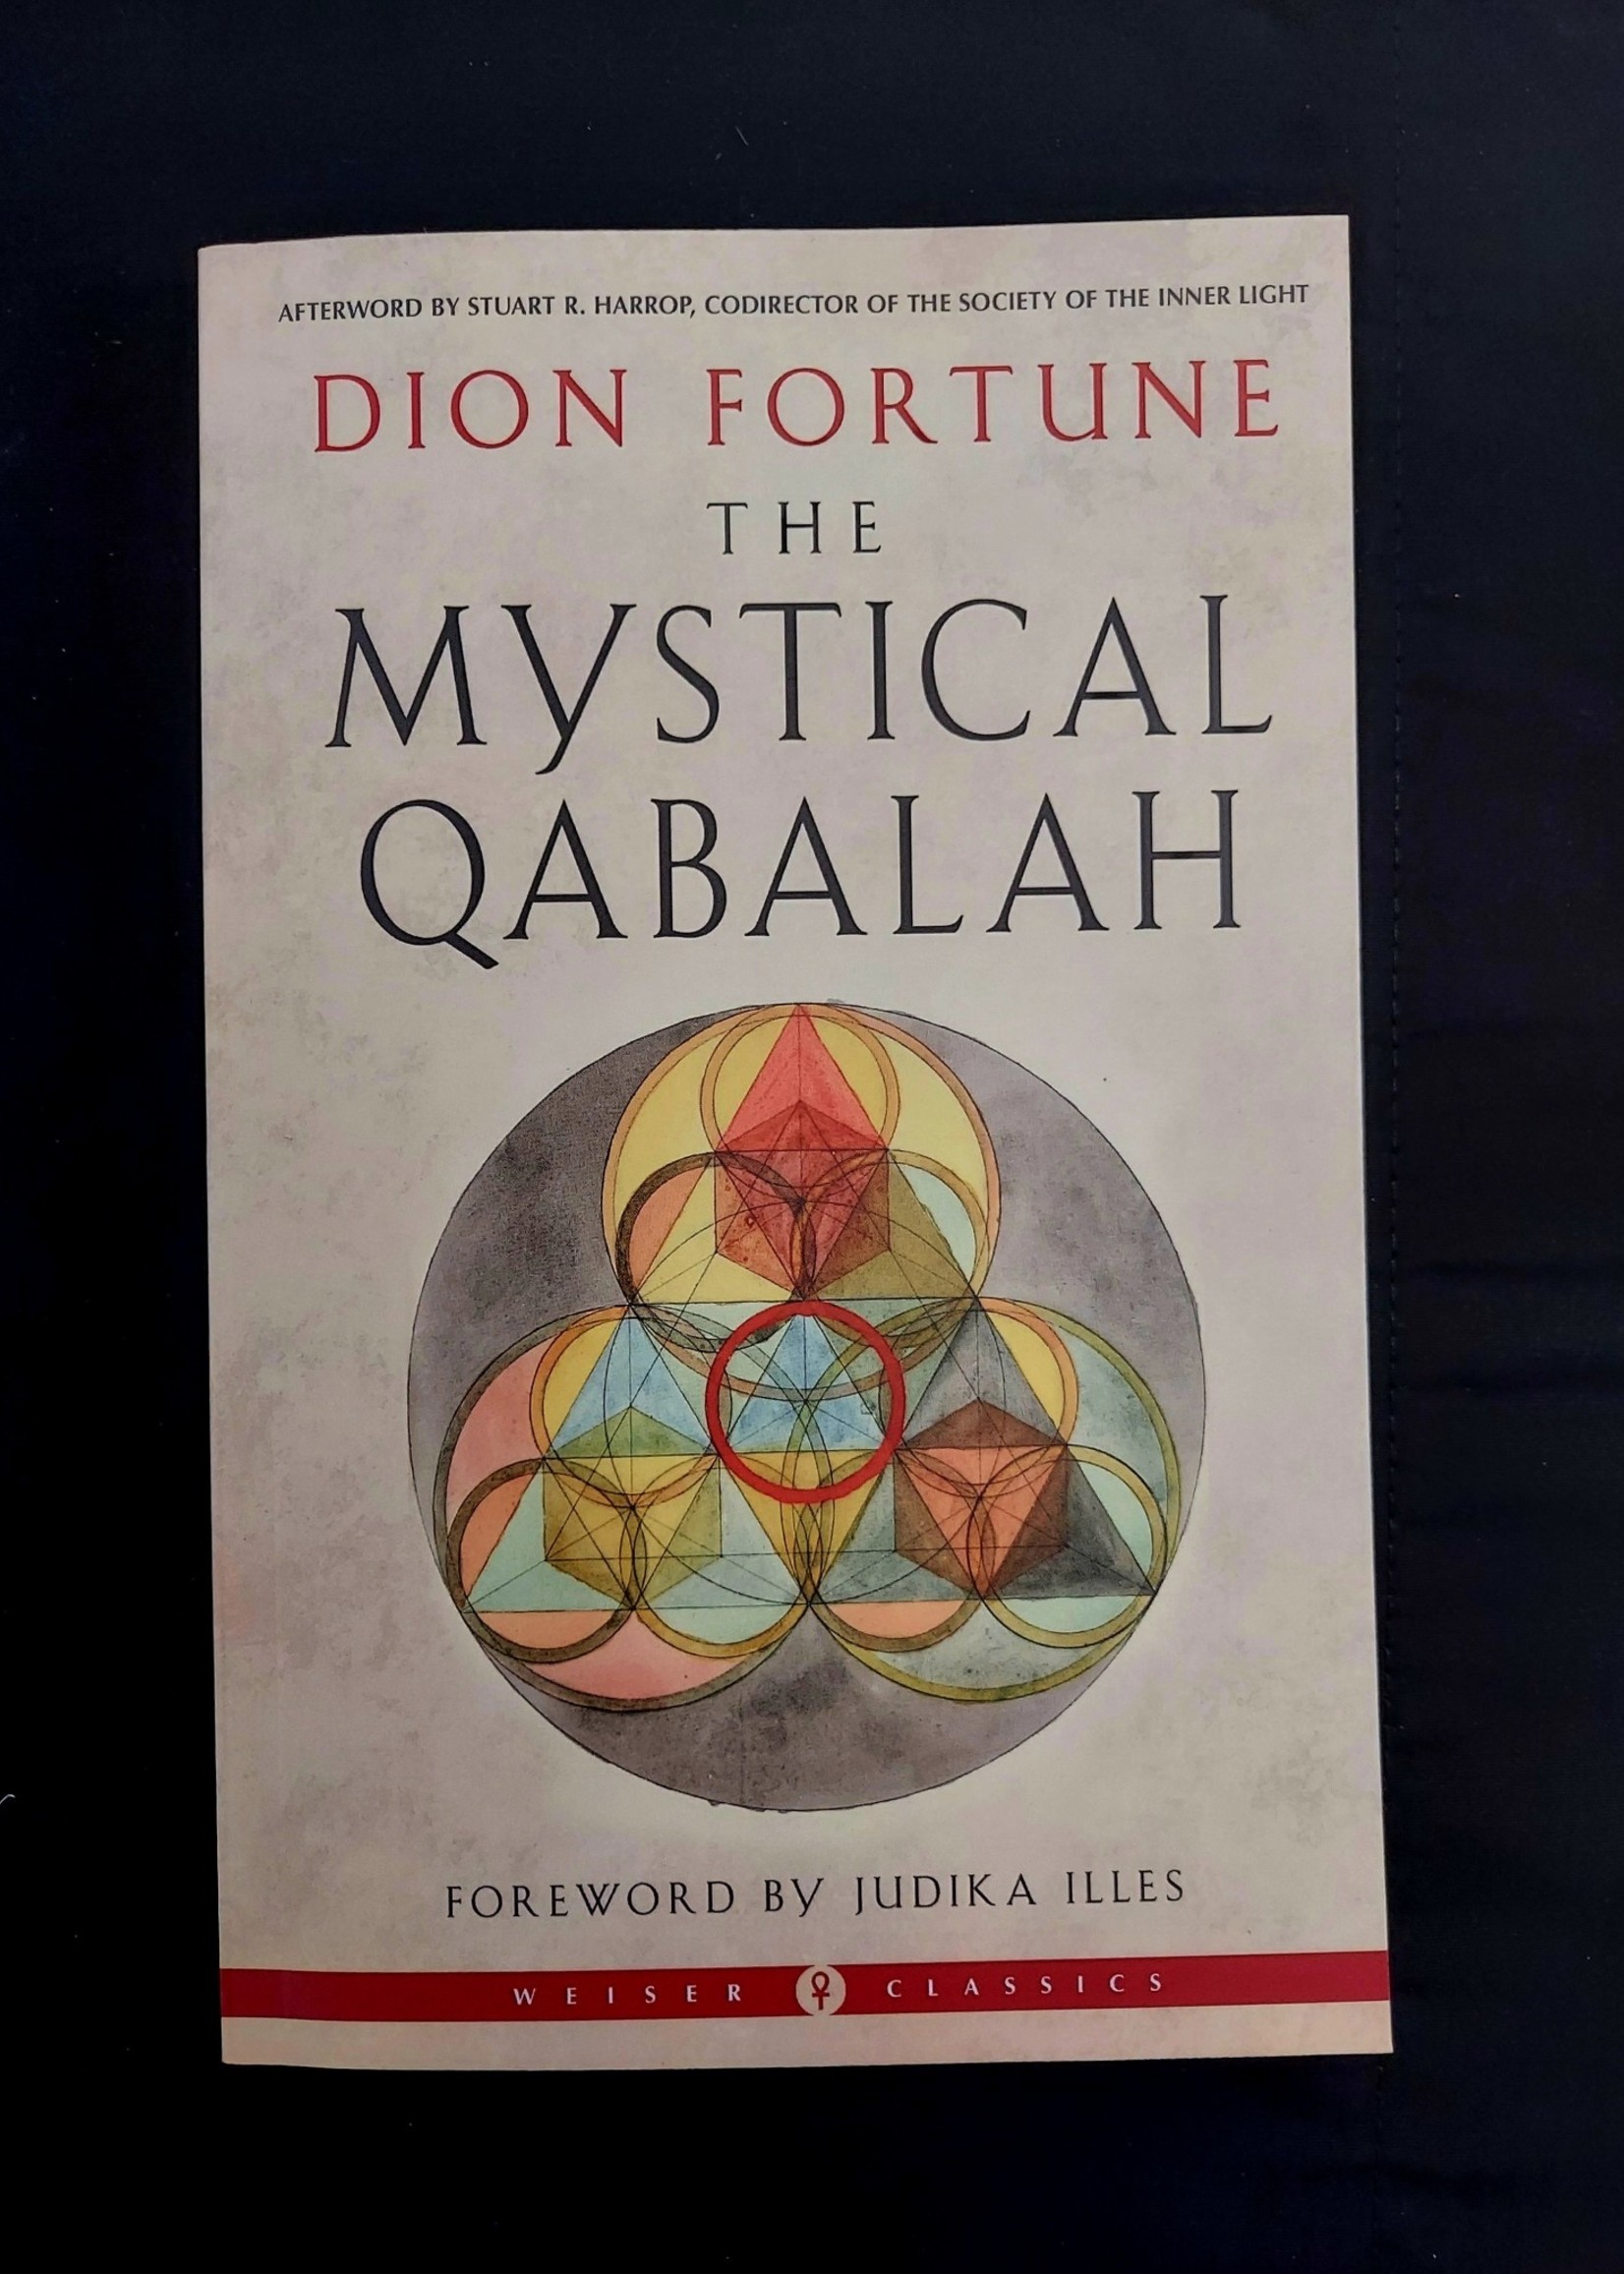 The Mystical Qabalah (Dion Fortune)